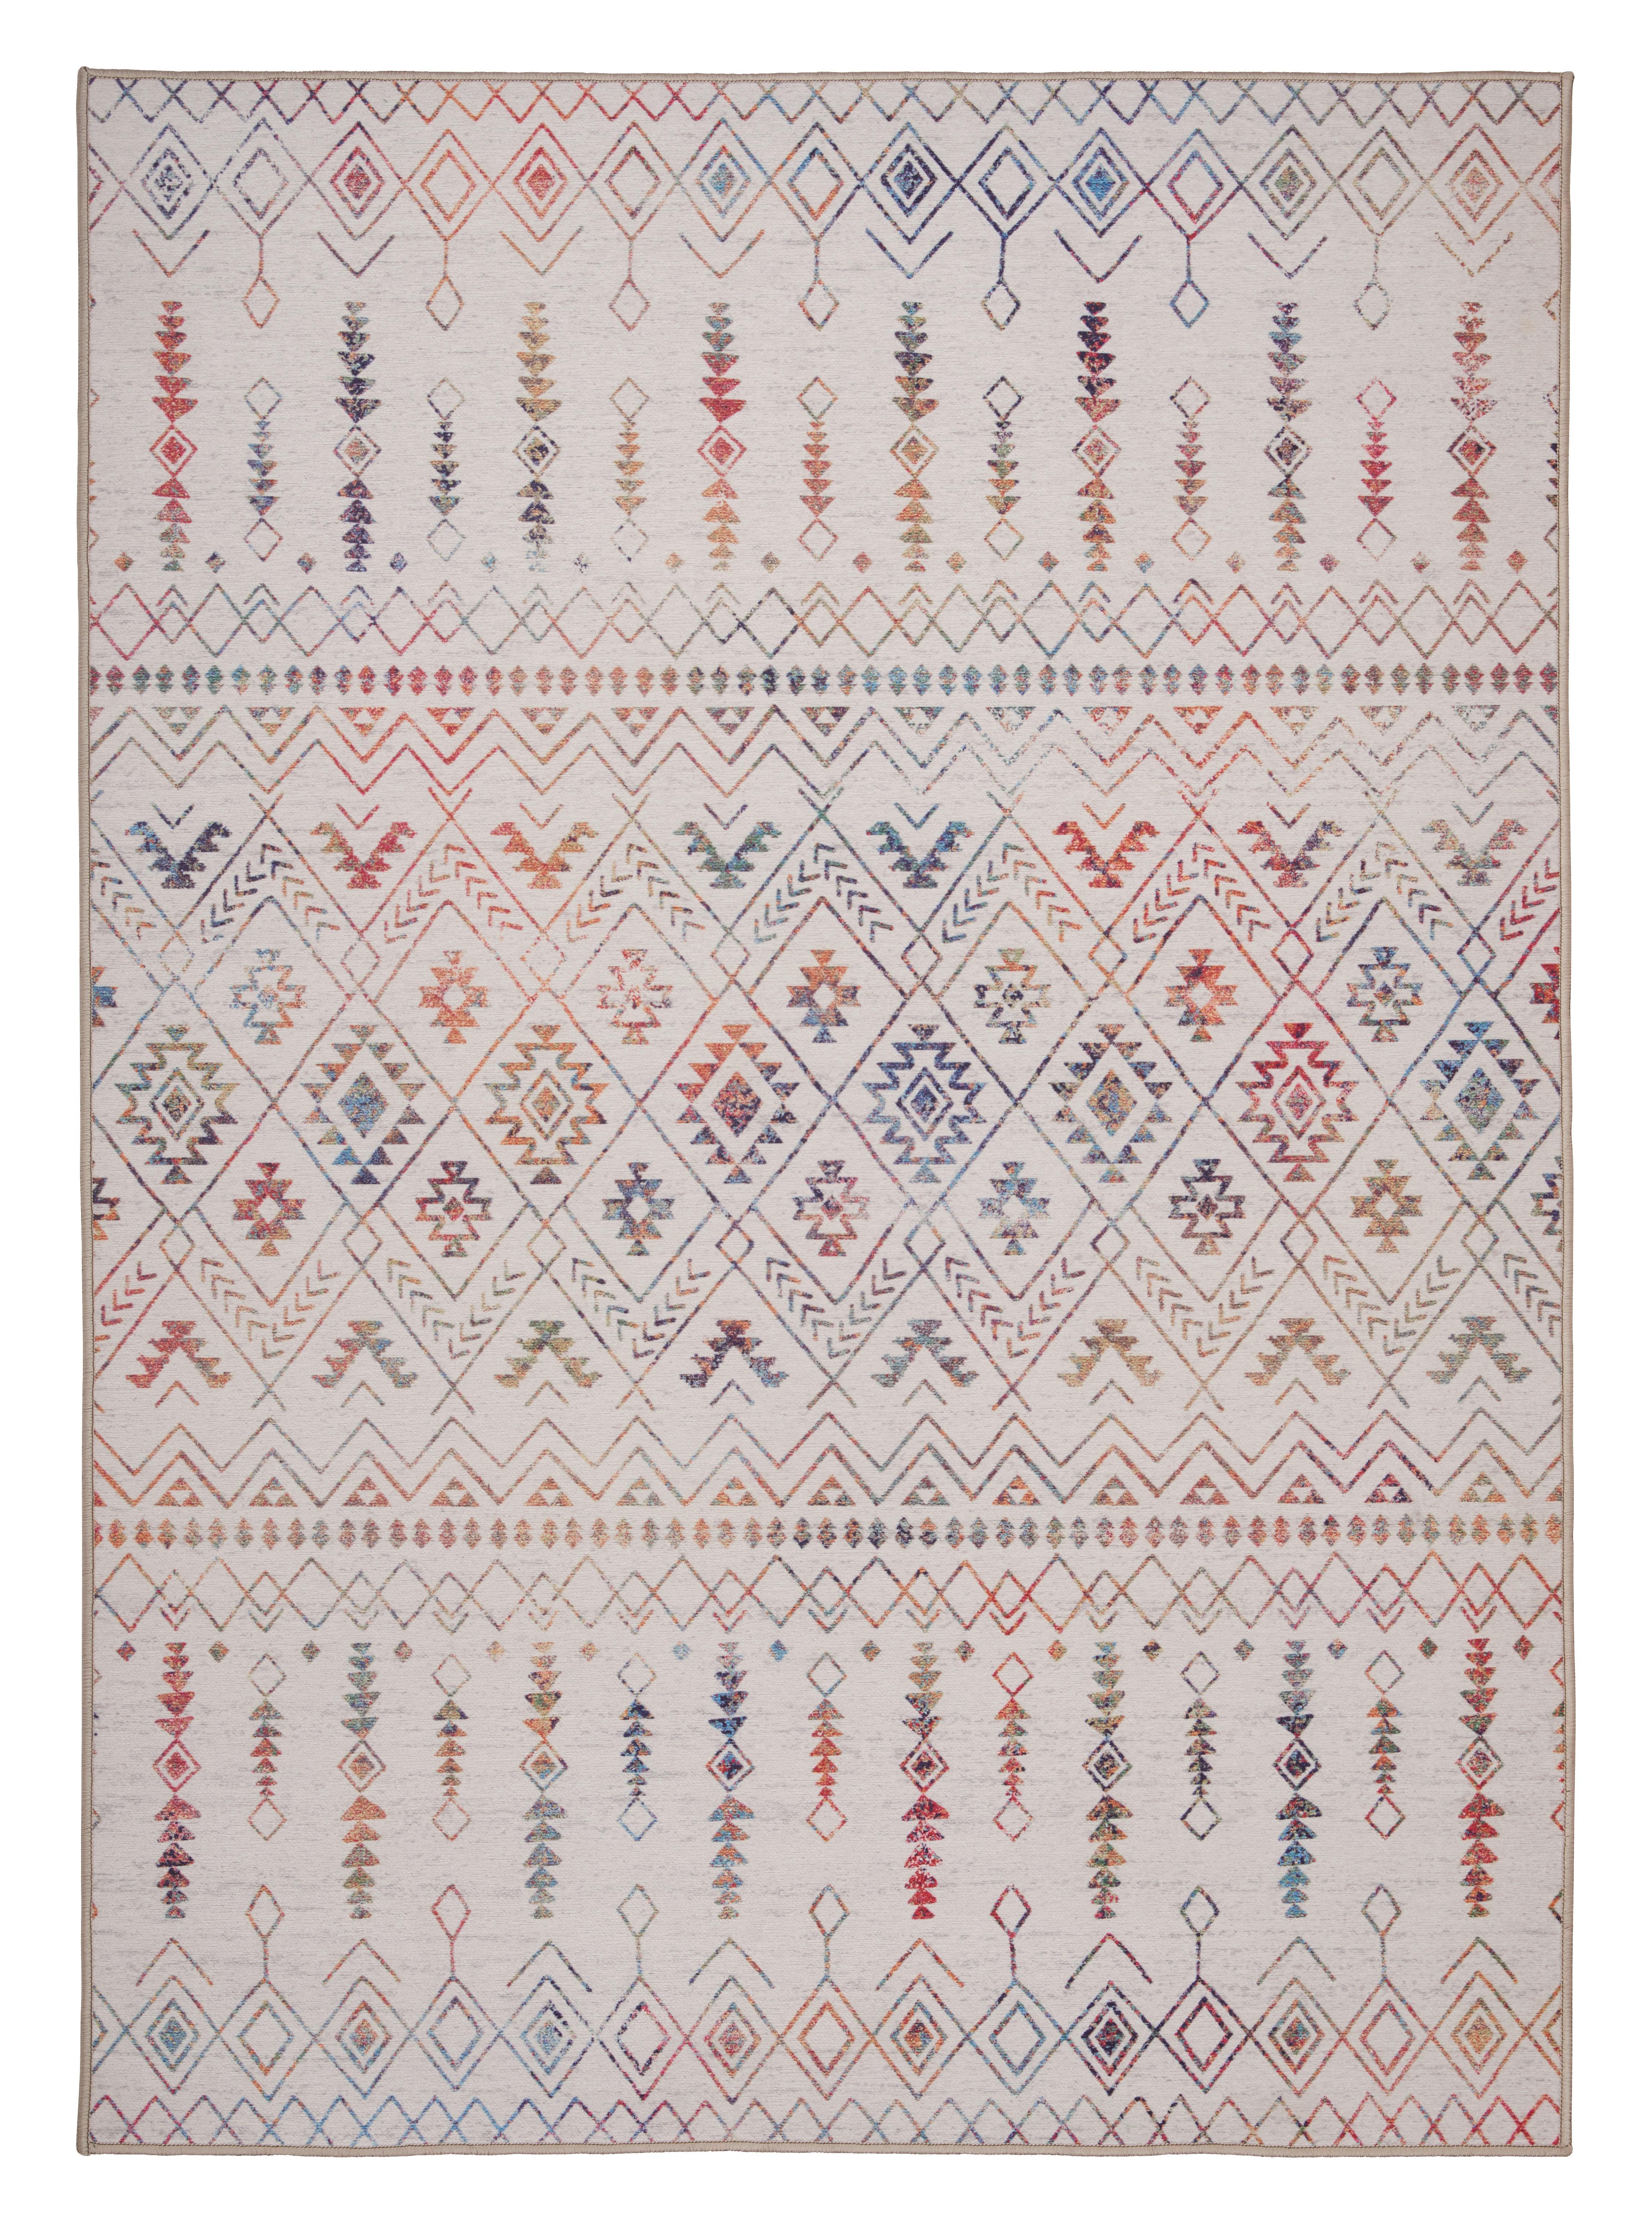 Webteppich Mississippi 3 in Multicolor ca. 160x230cm - Multicolor, Textil (160/230cm) - Modern Living